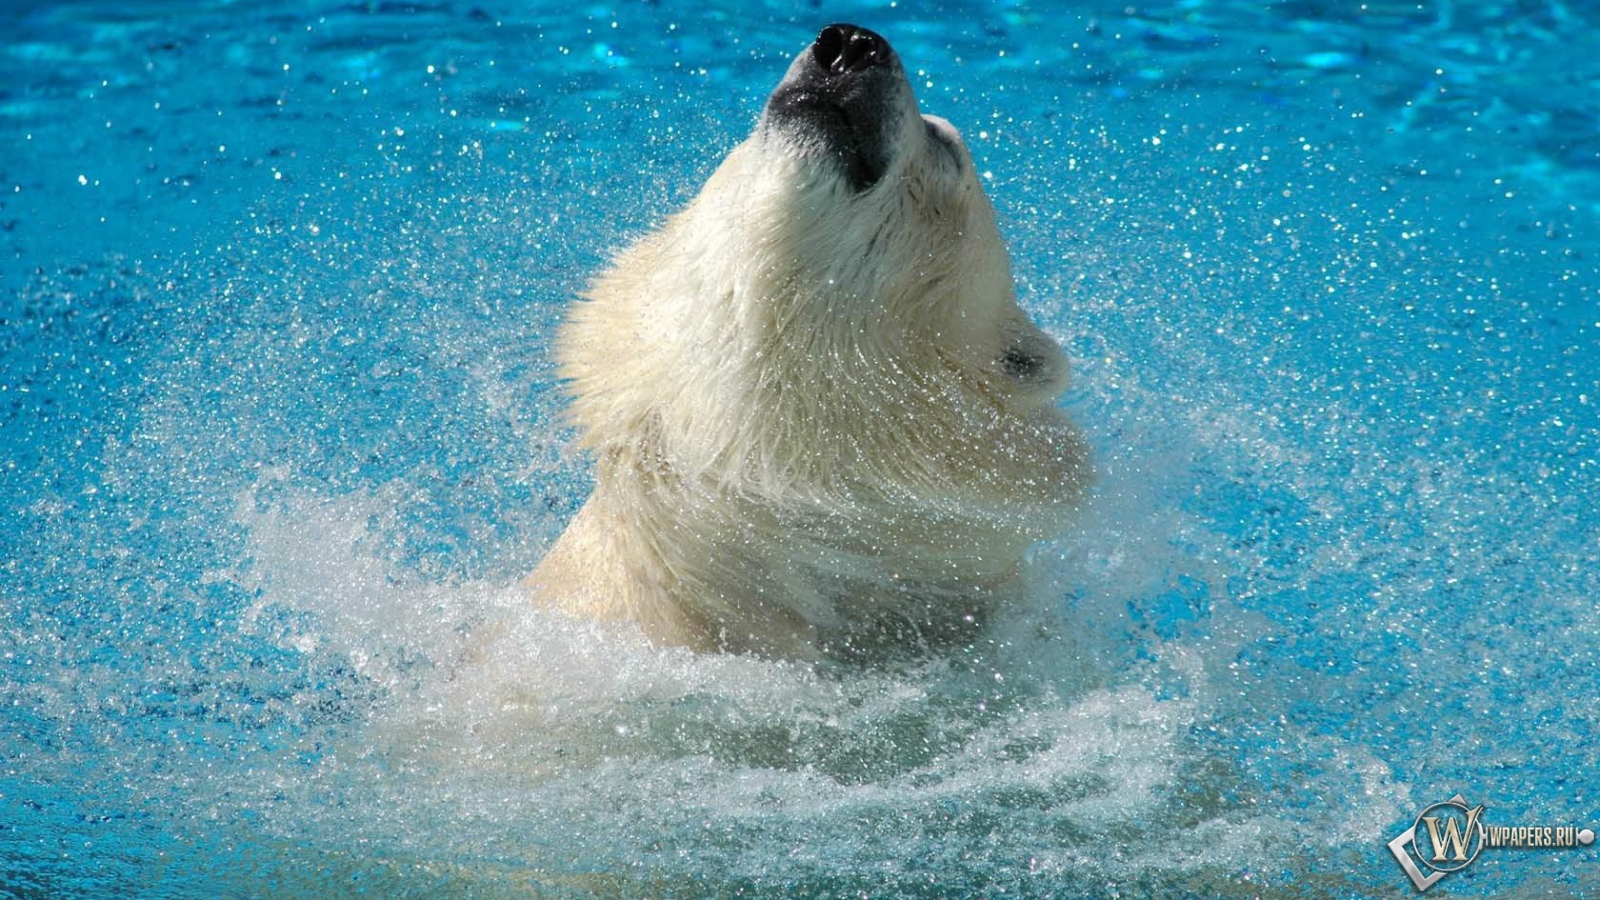 Медведь в воде 1600x900